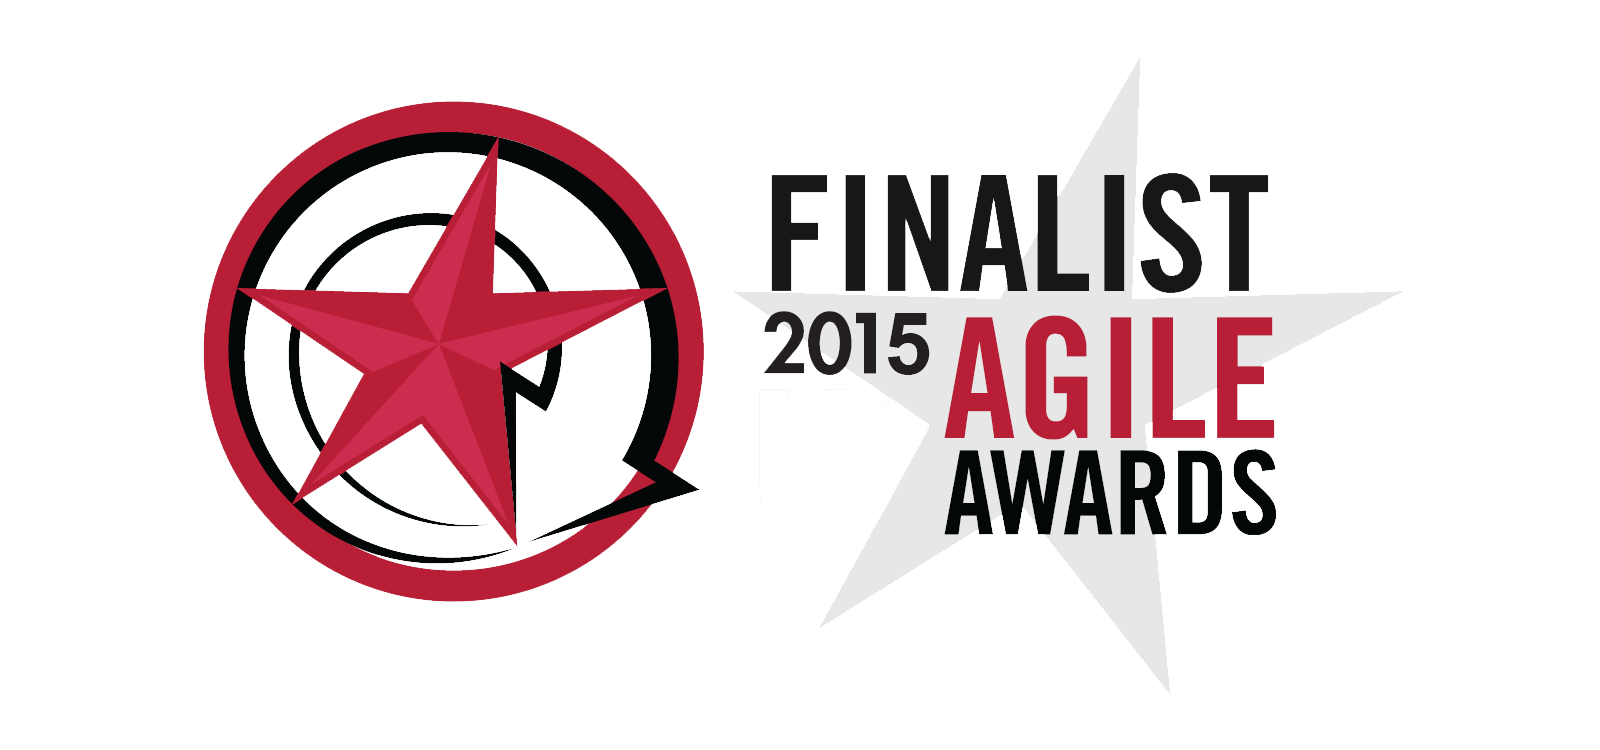 2015 Agile Awards Finalist badge